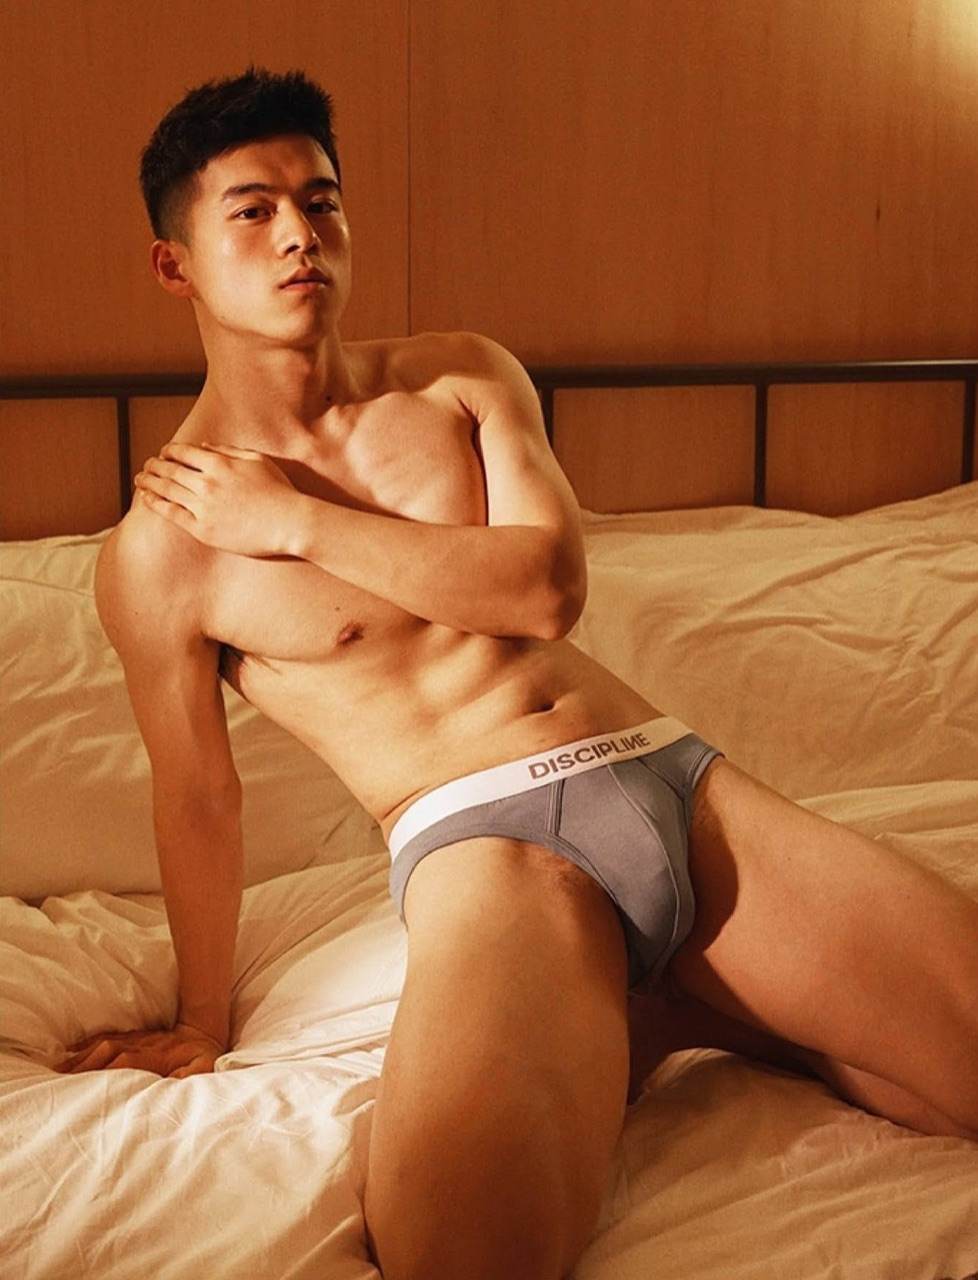 Hot men in underwear 559